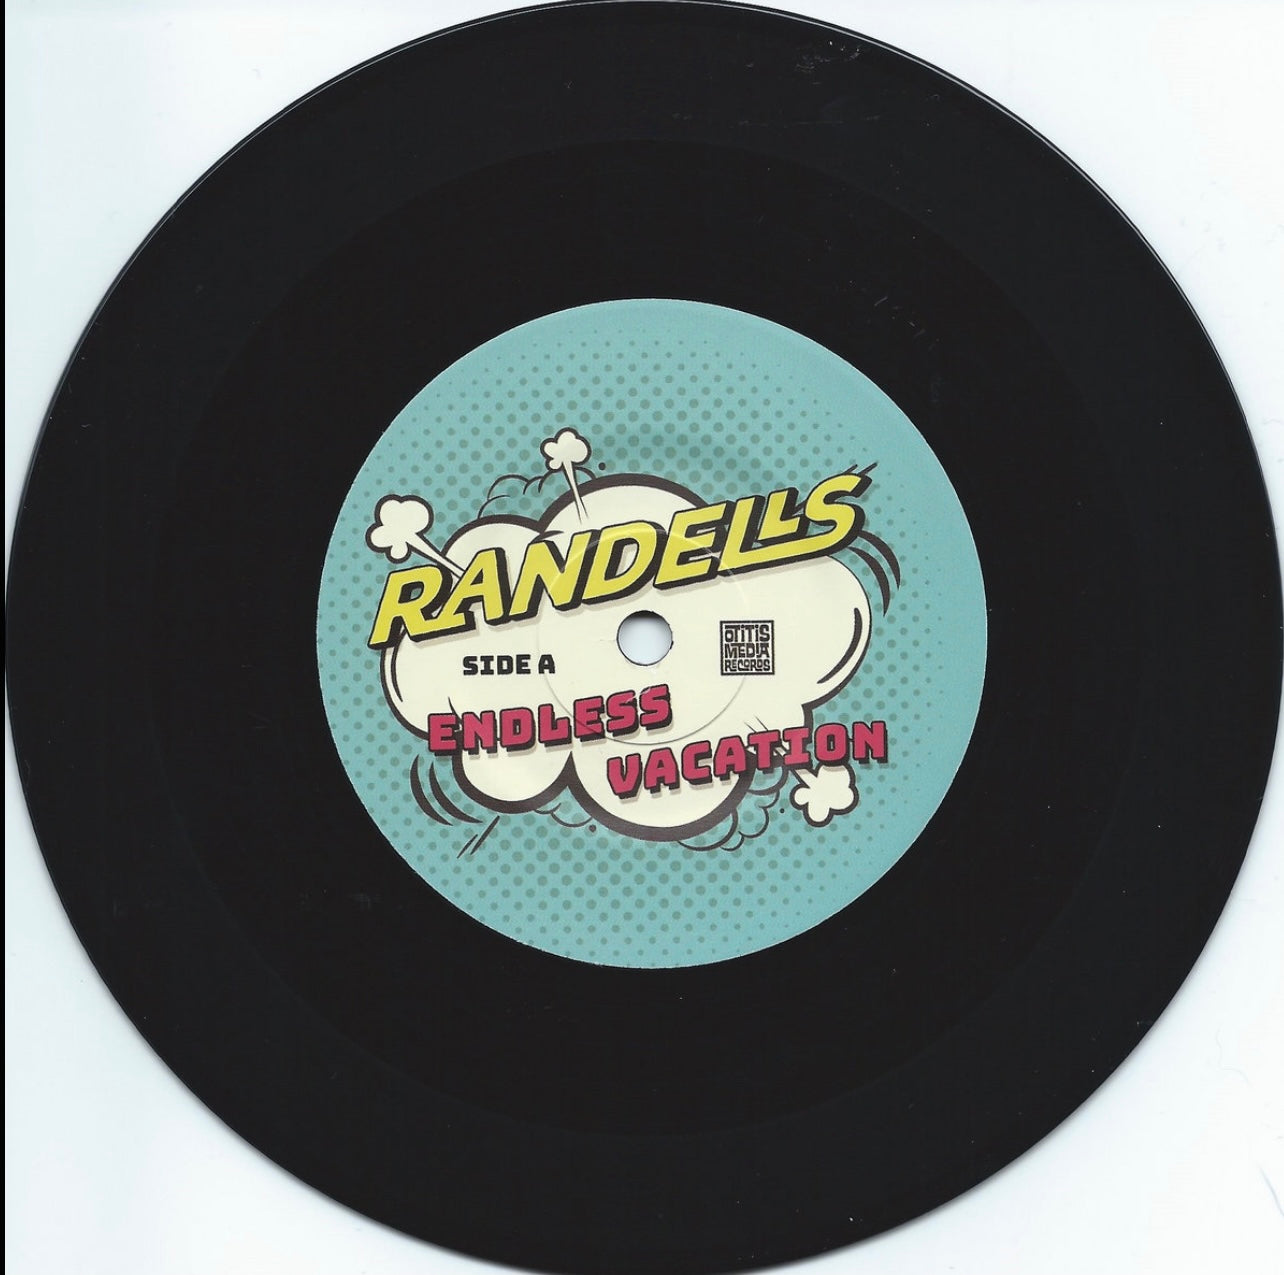 OMR-013 RANDELLS “Endless Vacation” 7 inch EP (Bubblegum Pink/Black Vinyl)